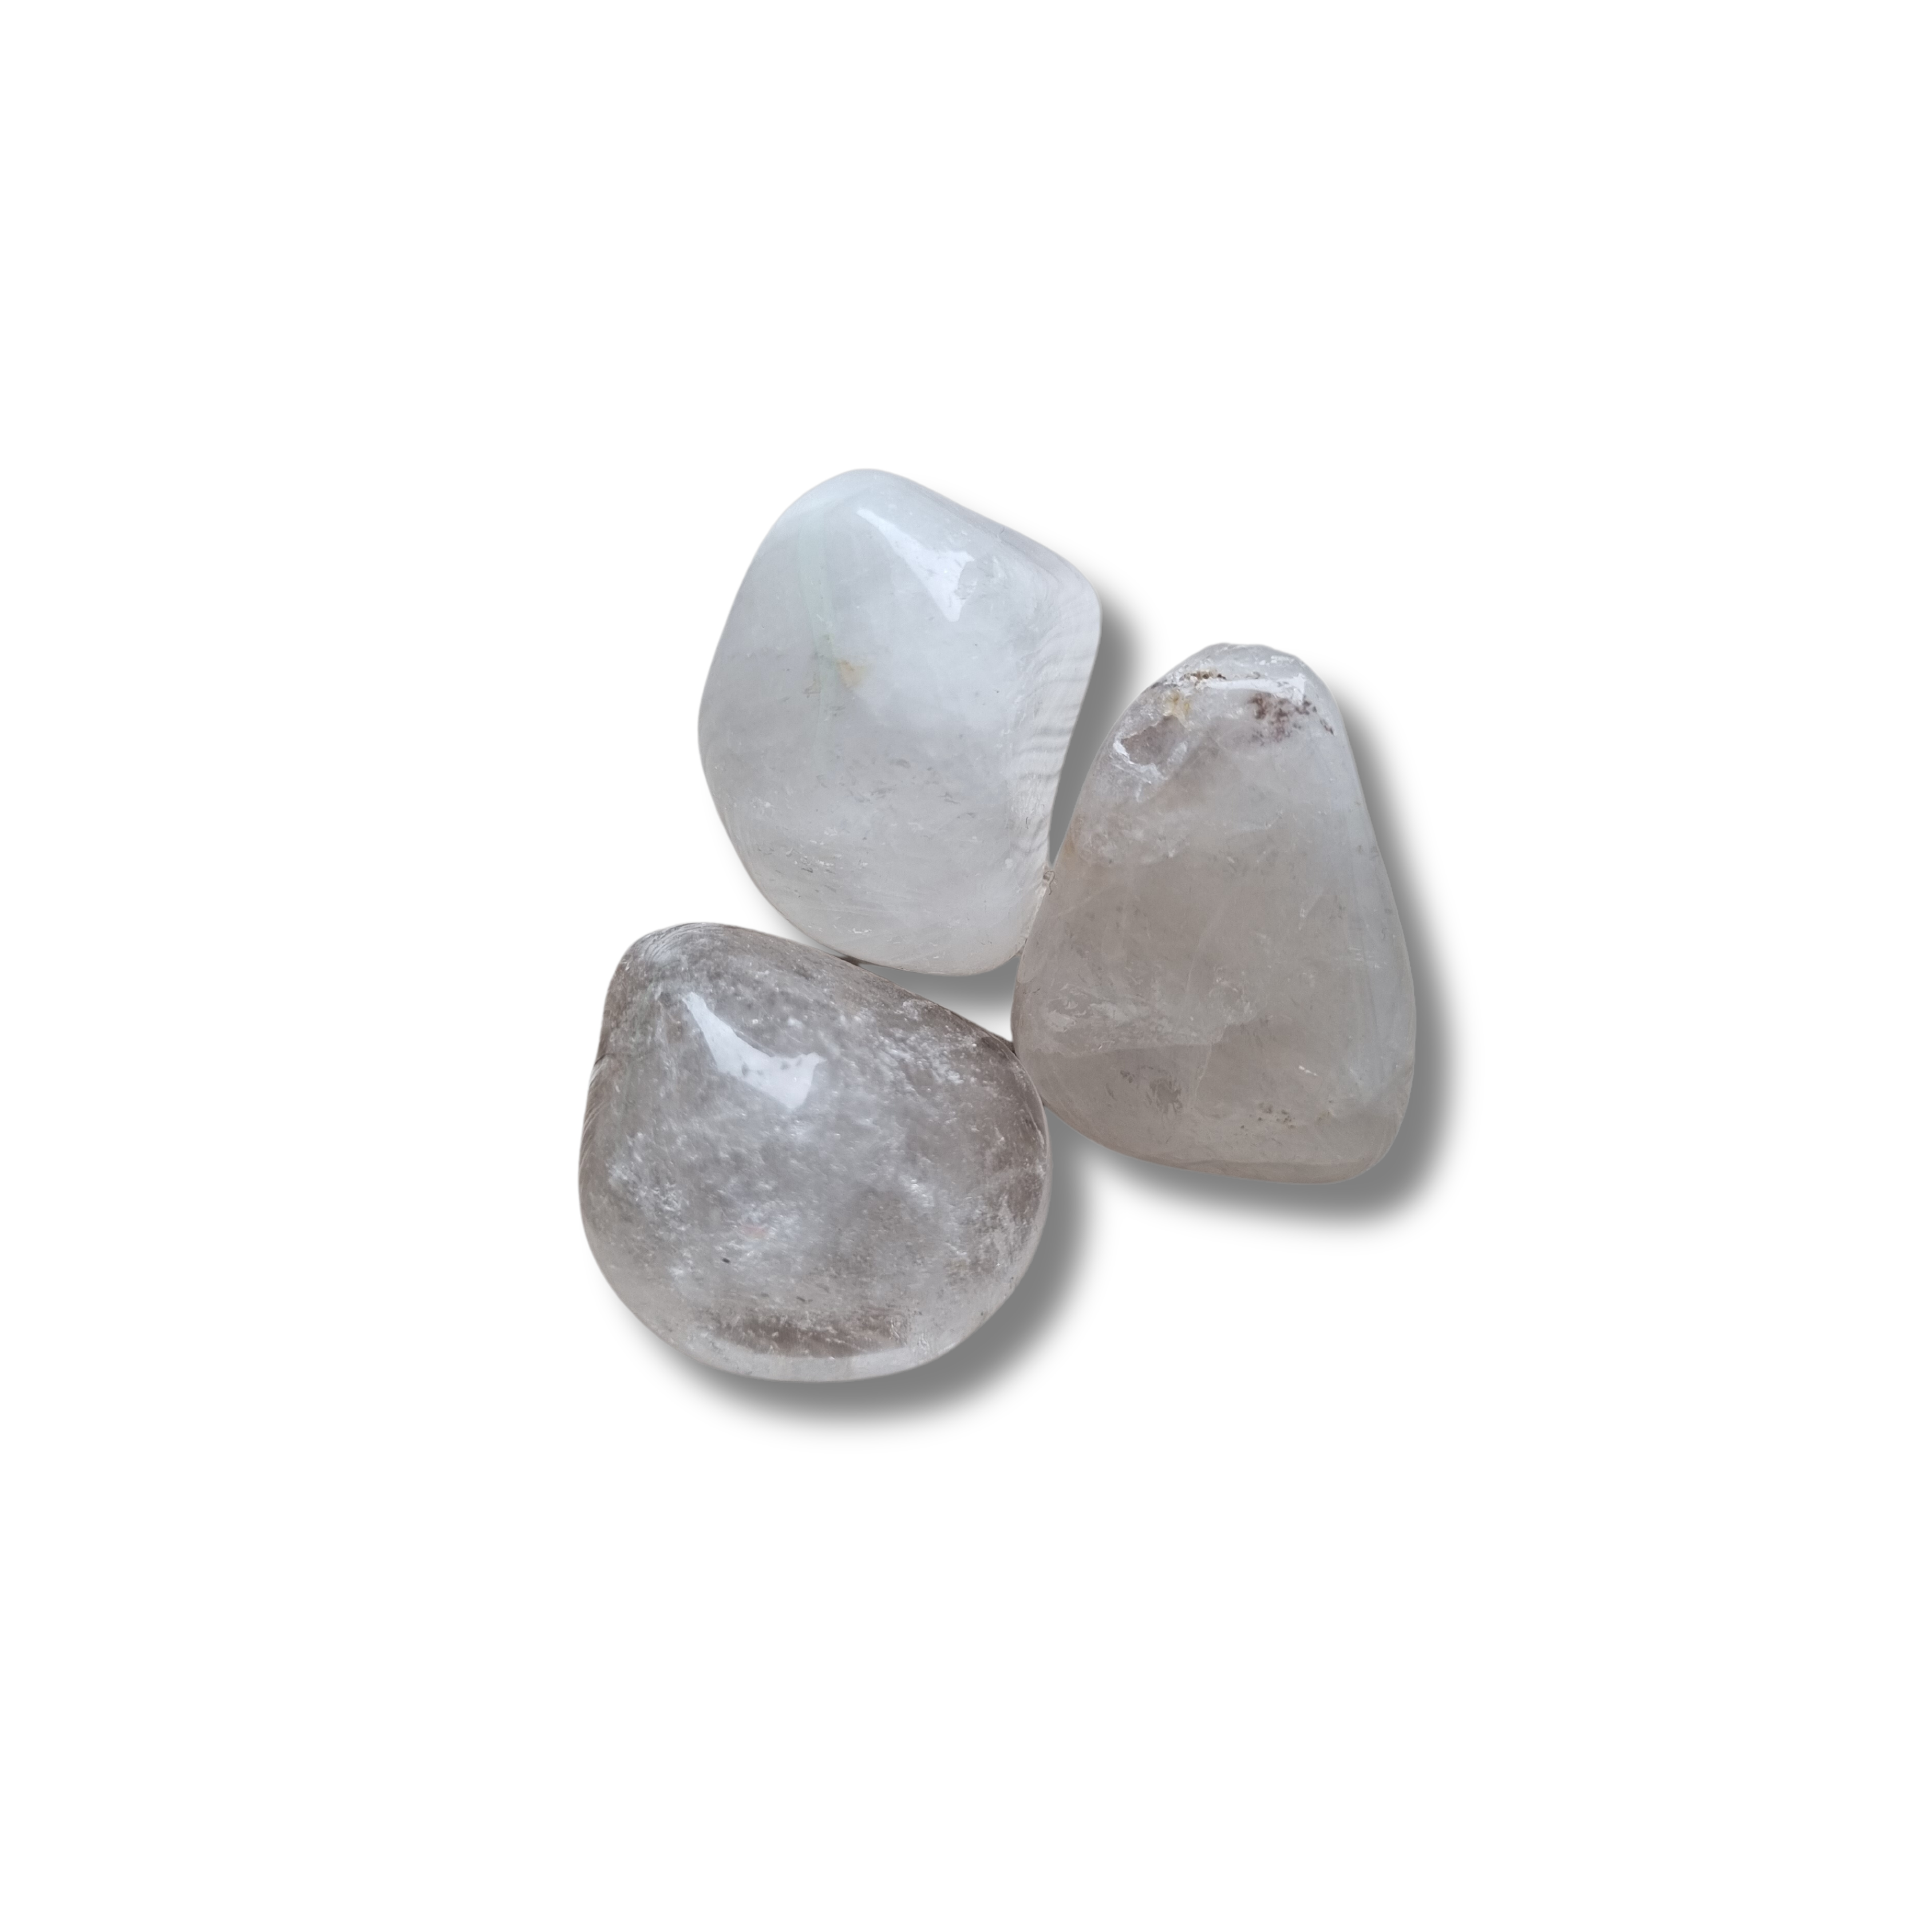 Rock crystal - Pocket stone